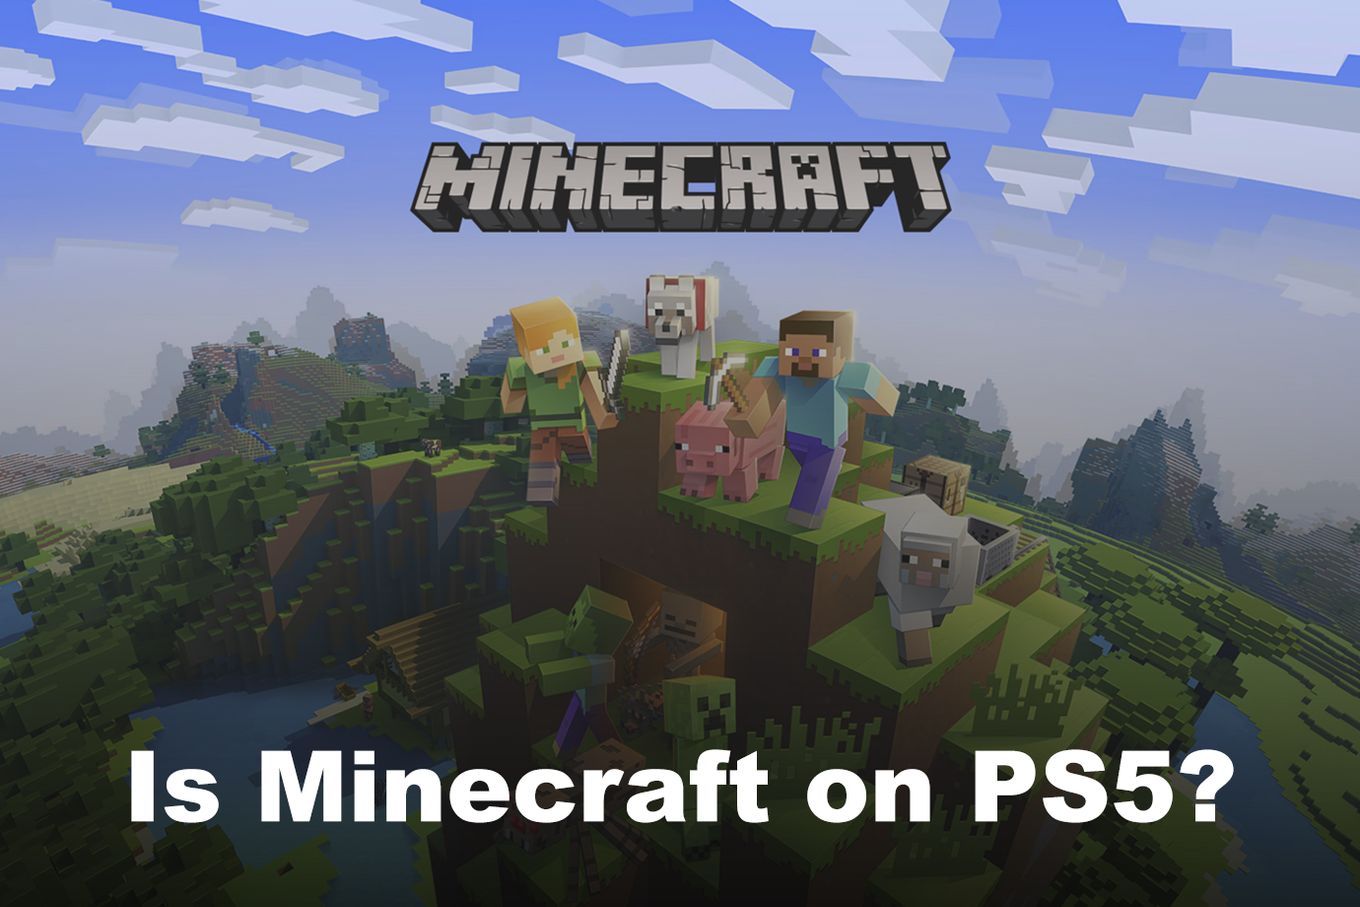 Minecraft PS5 Console Edition - Will It Happen? 